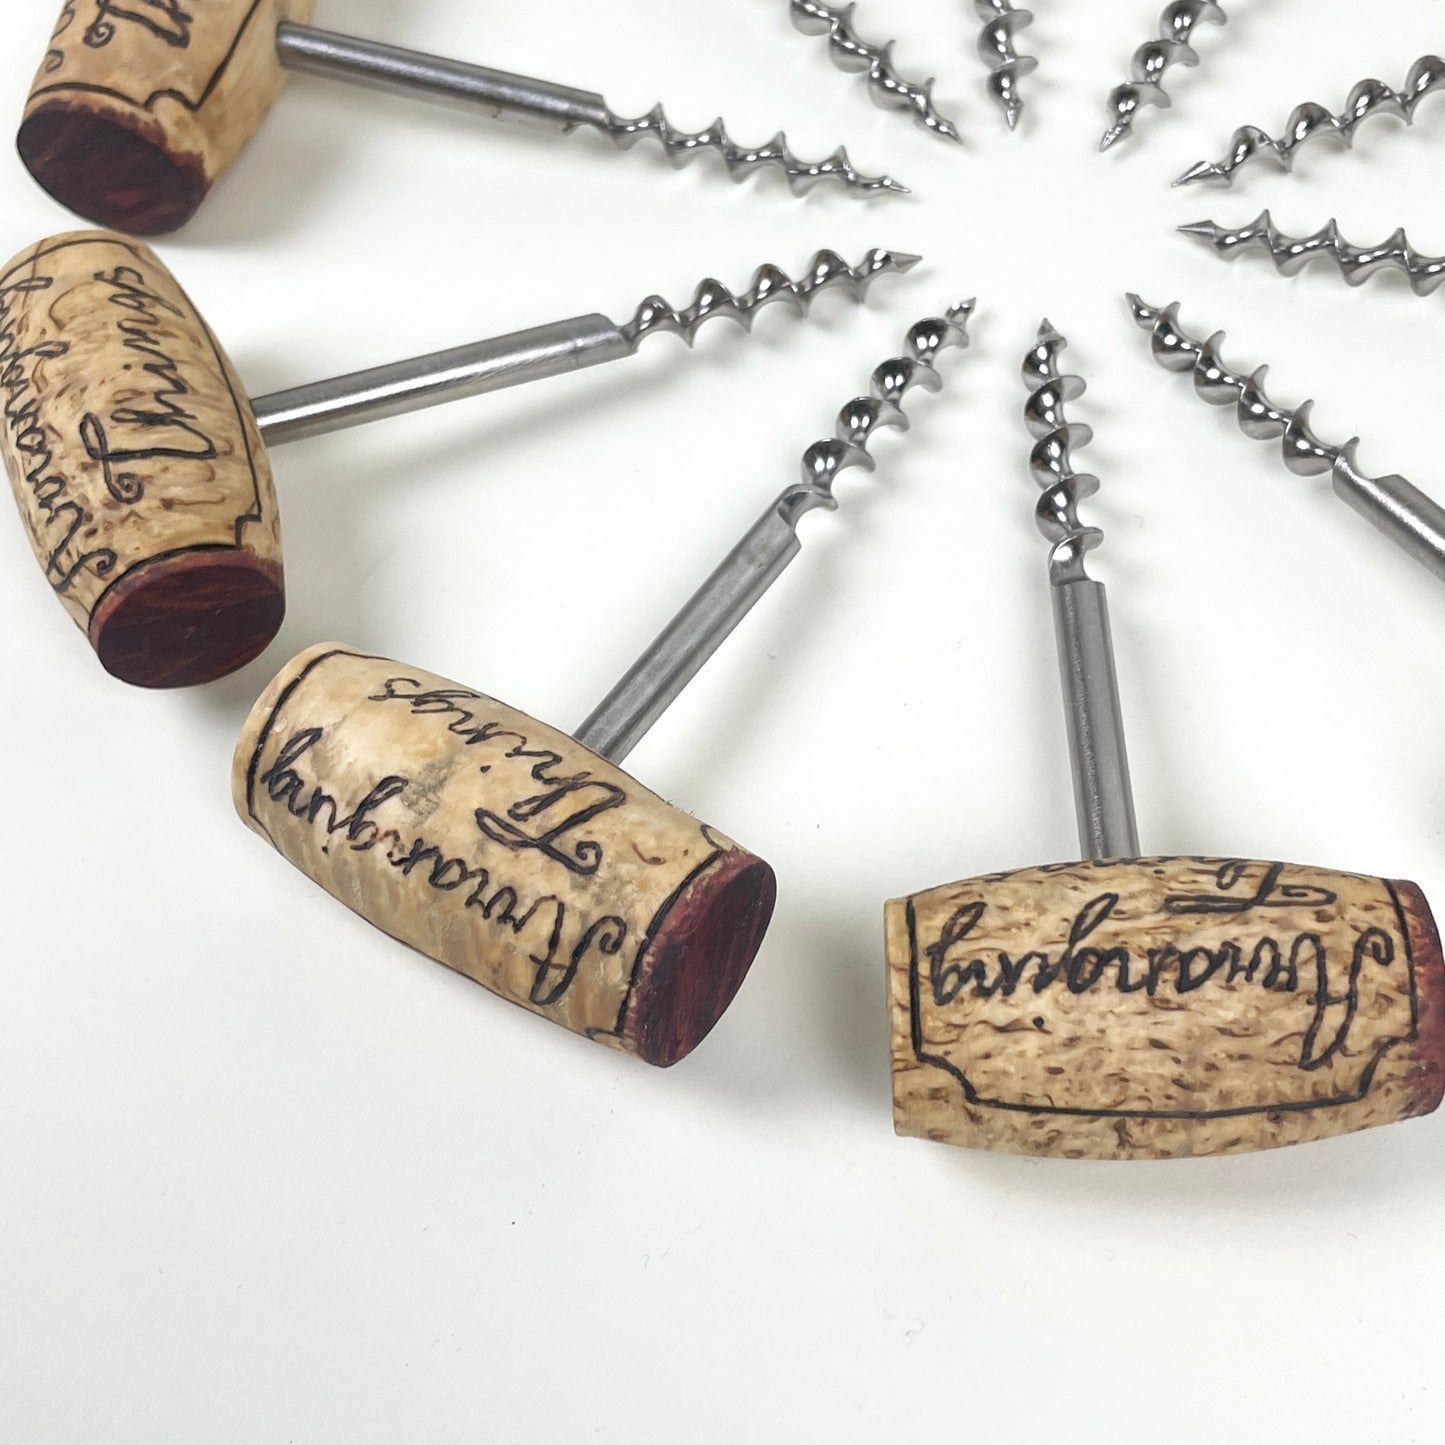 Arranging Things corkscrew in curly birch by Kasper Nihlmark